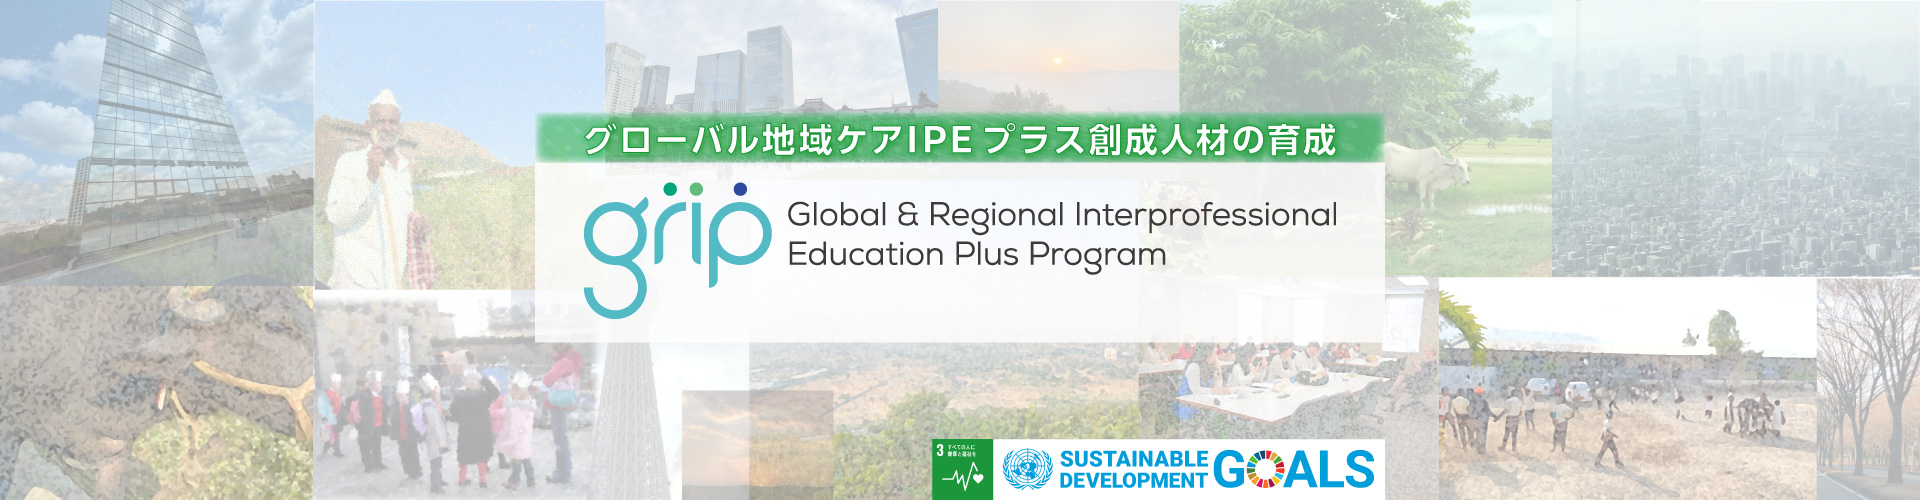 Global & Regional Interprofessional Education Plus Program：GRIP Program